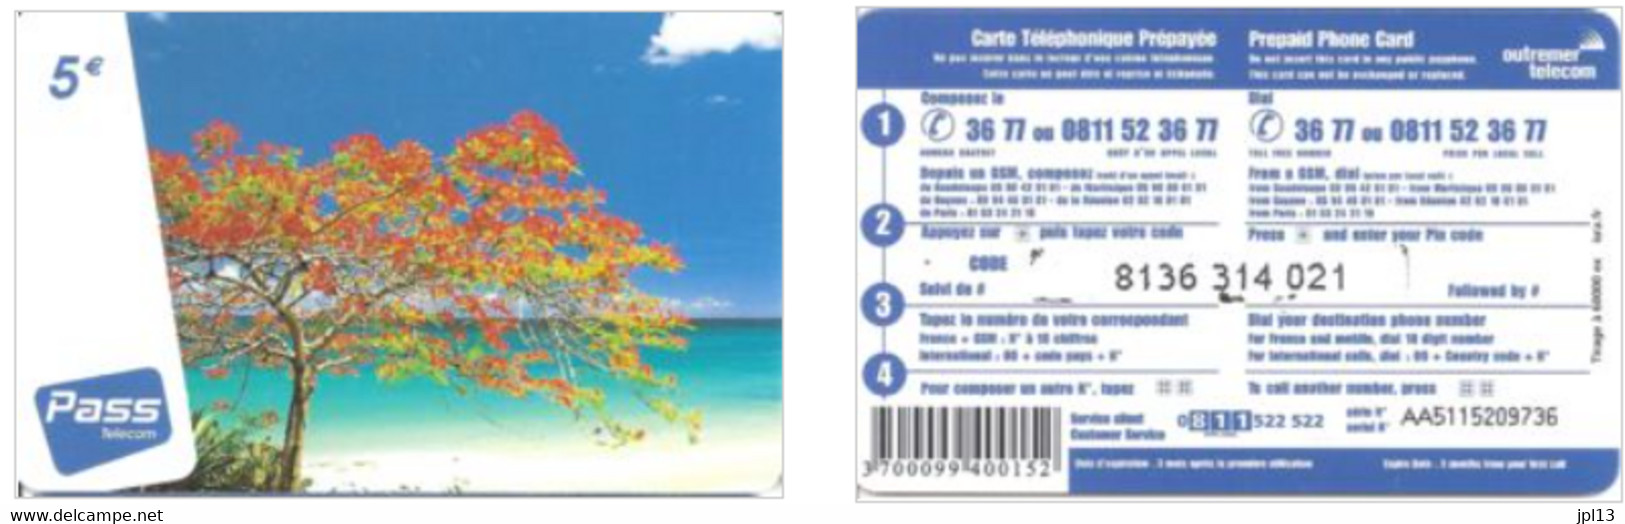 Carte Prépayée Outremer Telecom 5€ Flamboyant (Pass Telecom), Tirage 60.000 Ex., Série AA5115xxxxxx - Antillen (Frans)